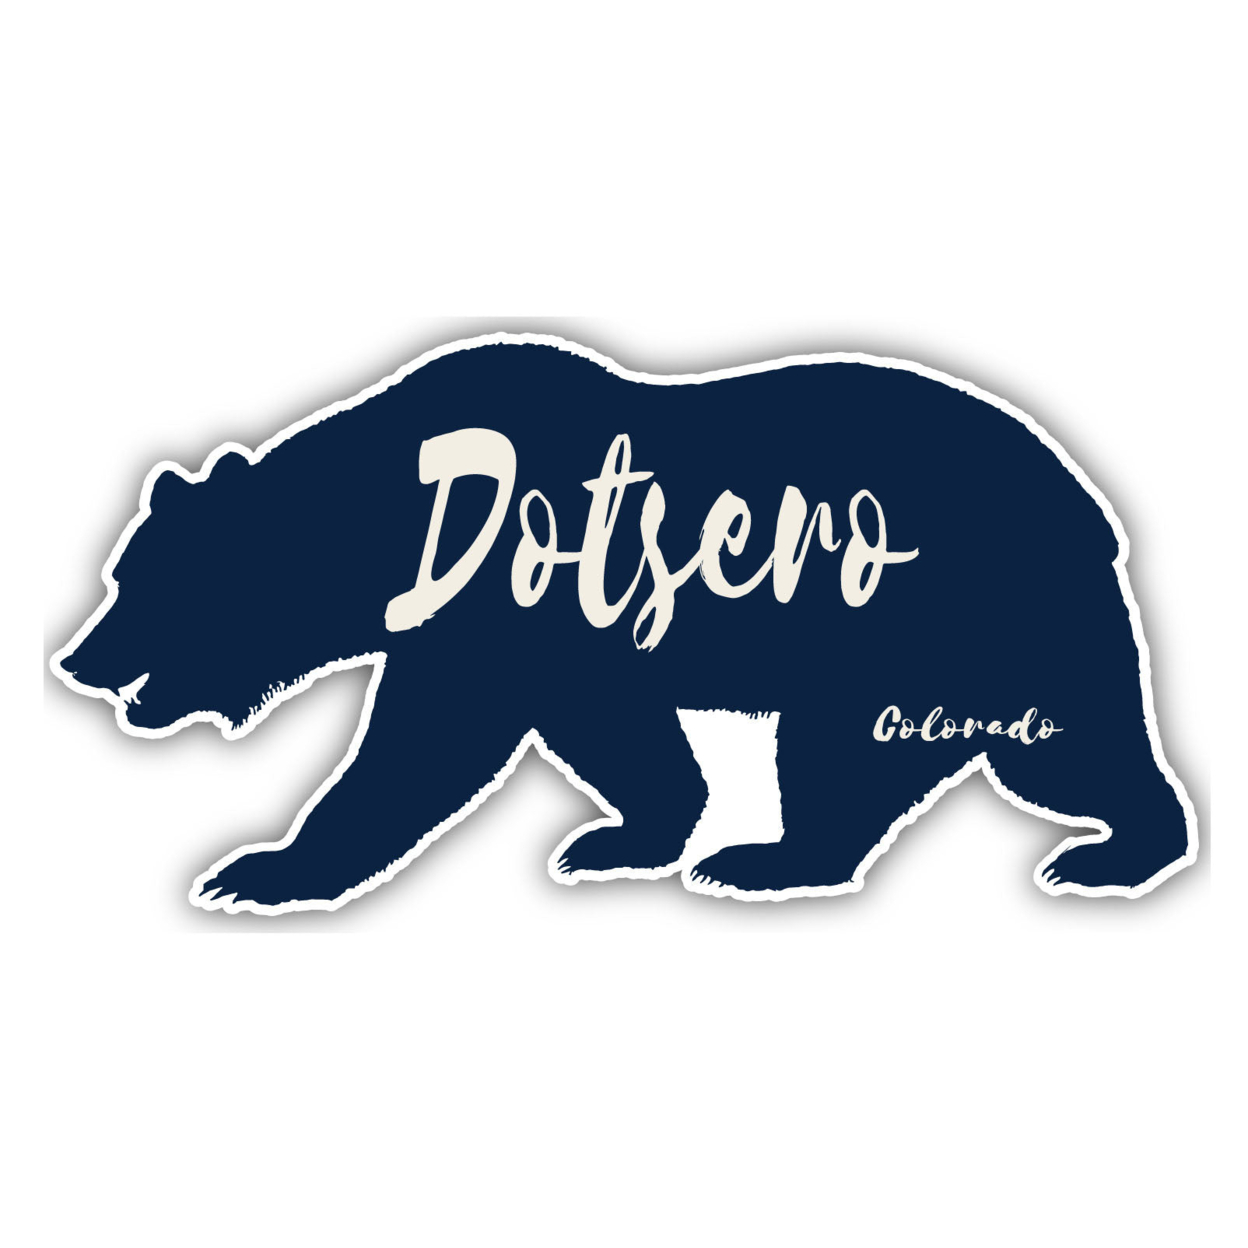 Dotsero Colorado Souvenir Decorative Stickers (Choose Theme And Size) - Single Unit, 4-Inch, Bear